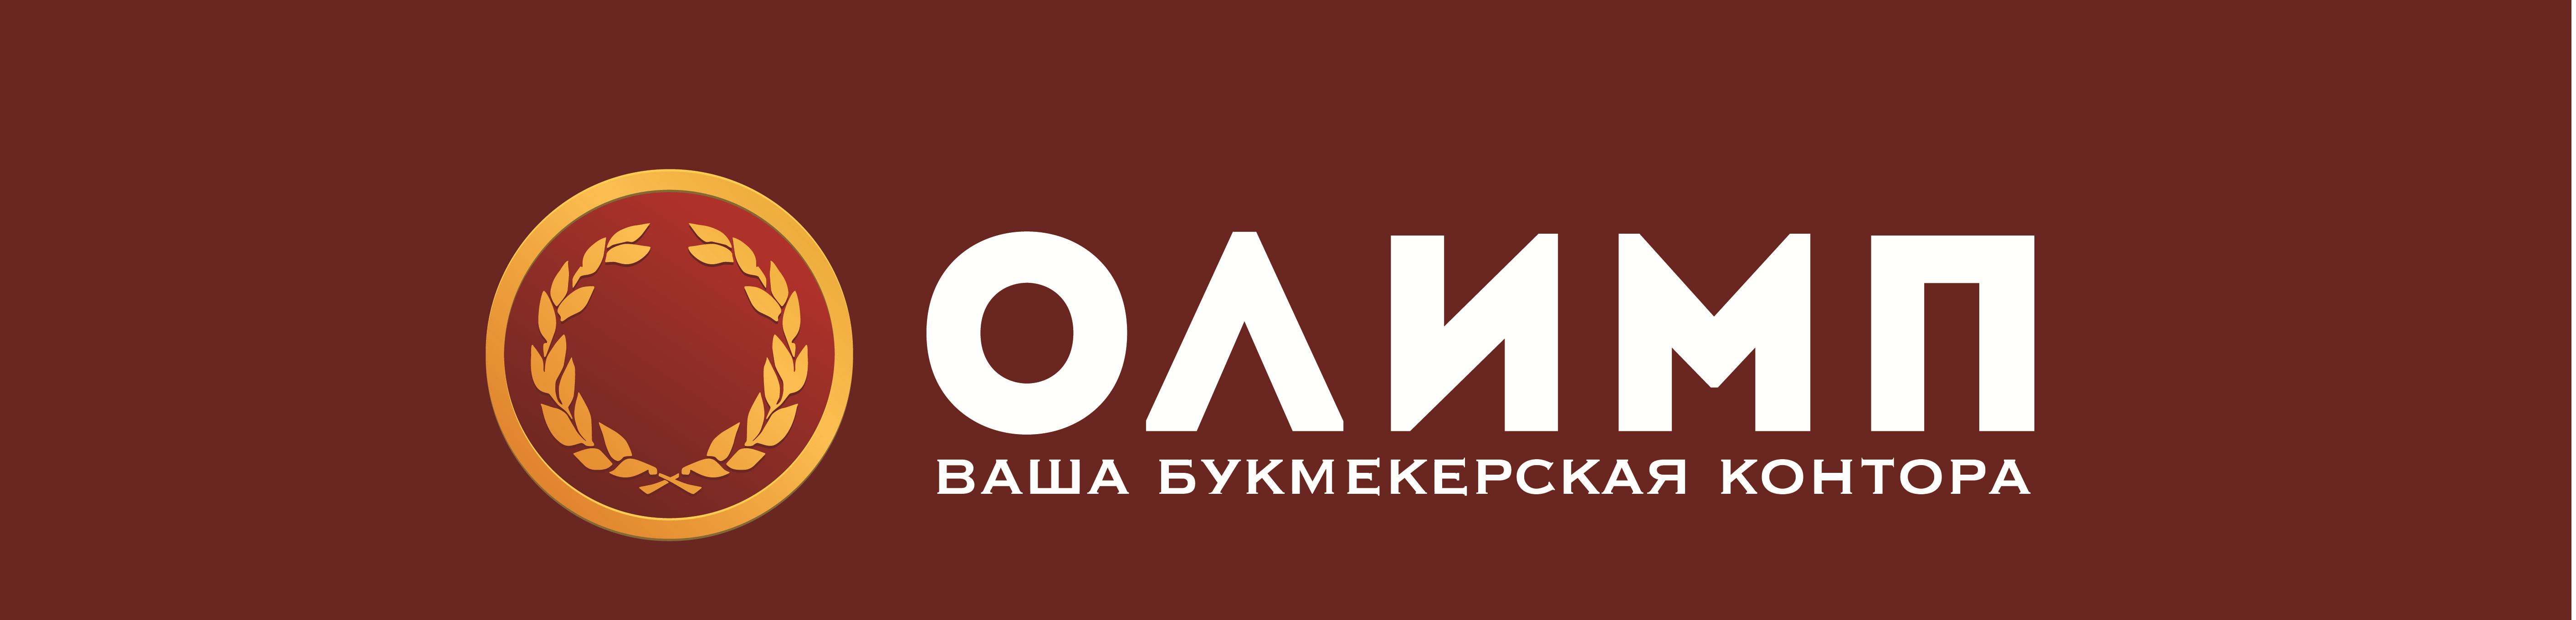 Olimp зеркало бк. Эмблема Олимп. Отель Олимп логотип. Мир Олимп логотип. Логотип Олимп Киргизия.